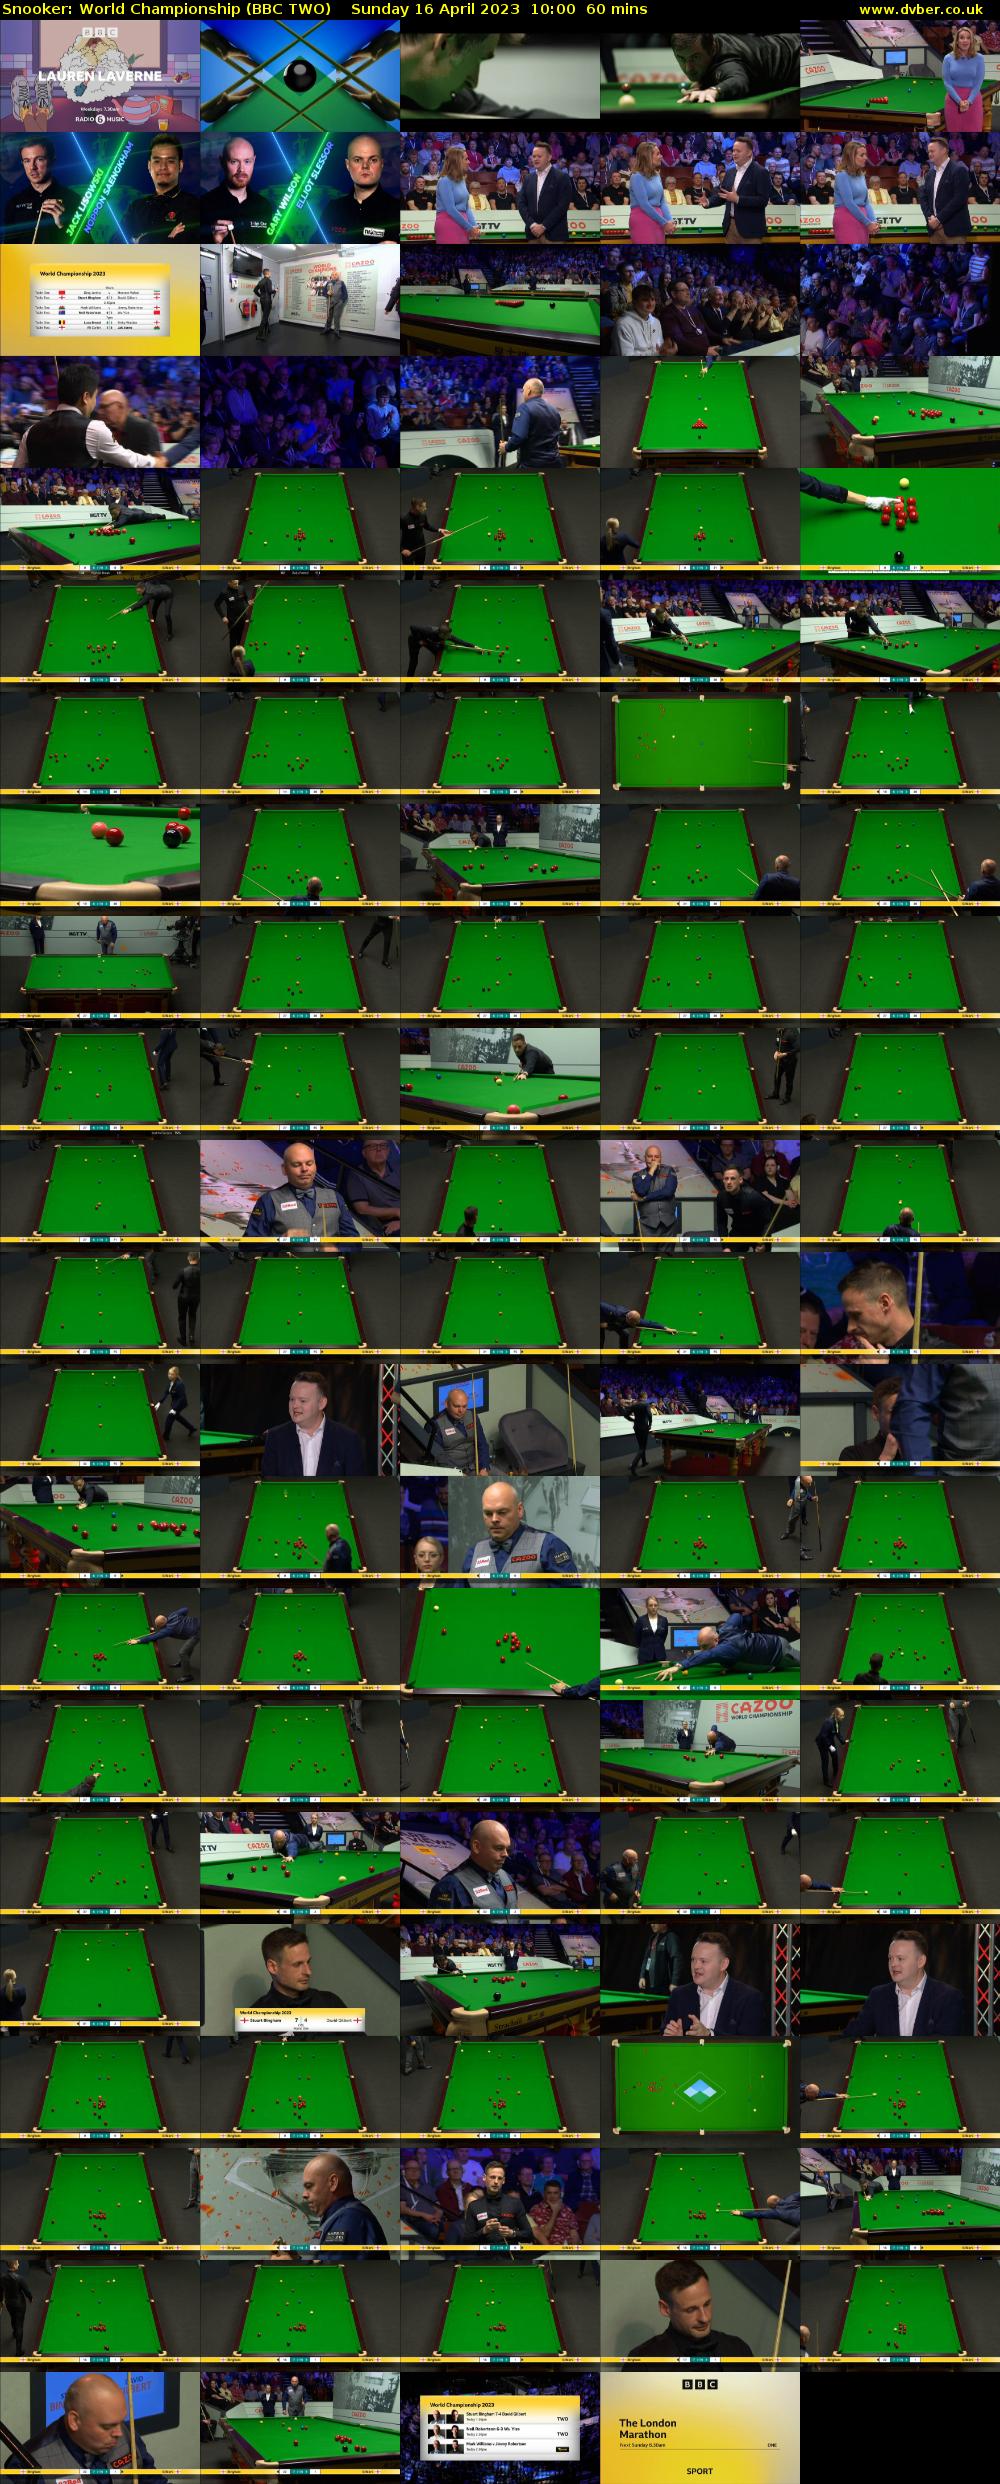 Snooker: World Championship (BBC TWO) Sunday 16 April 2023 10:00 - 11:00